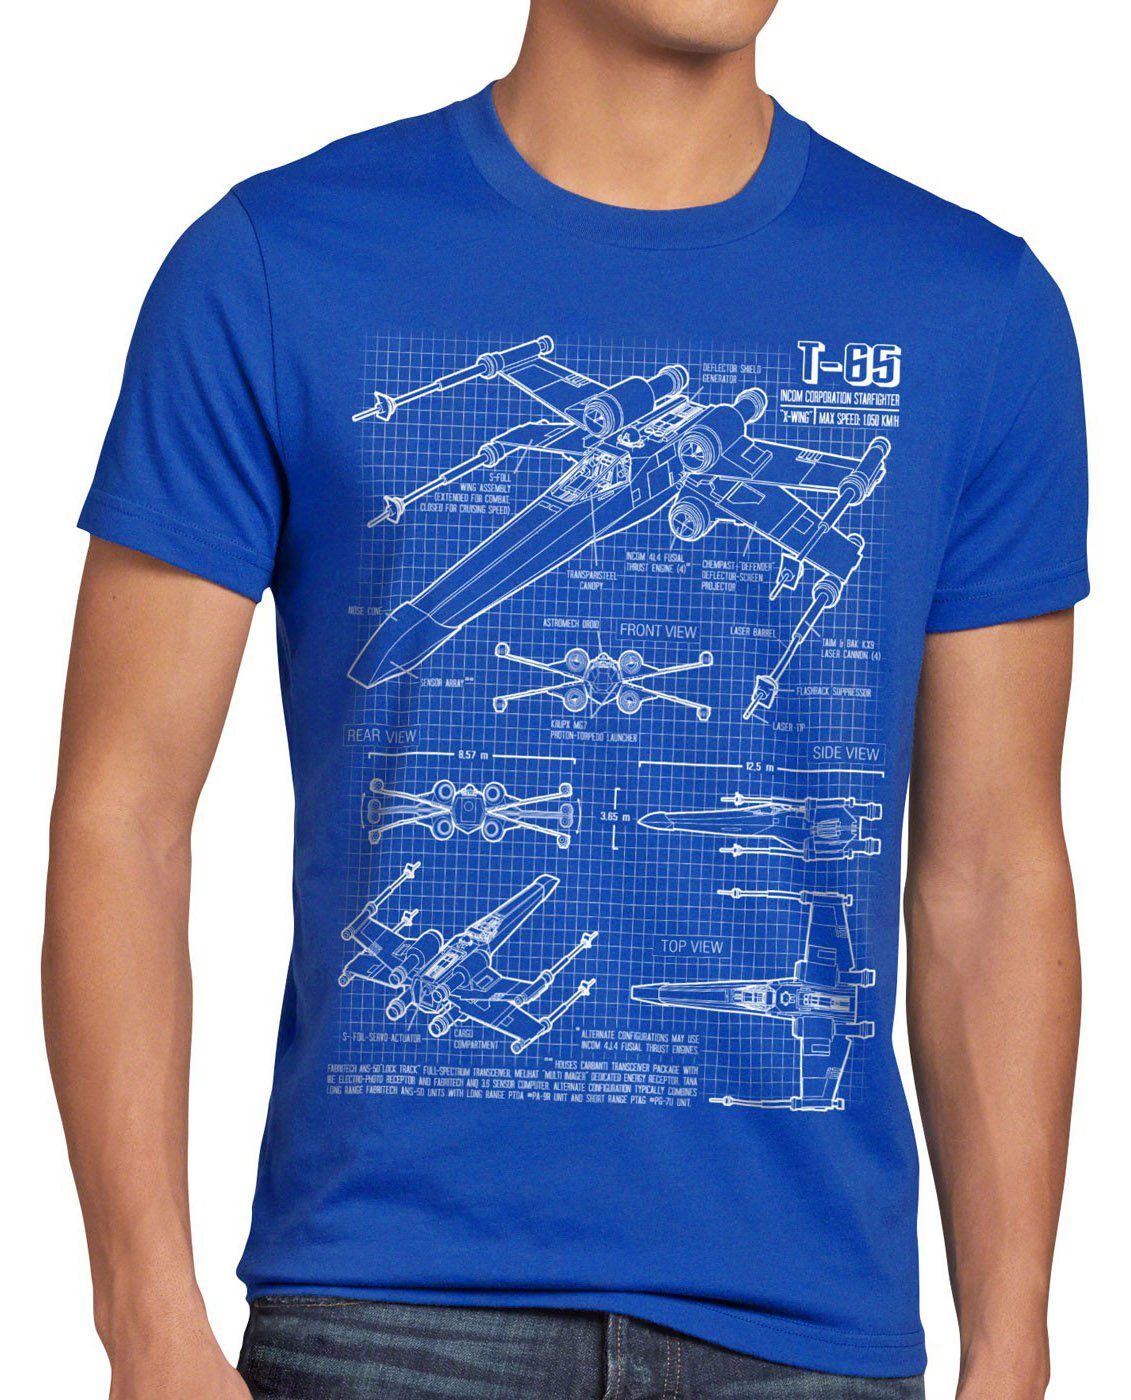 style3 Print-Shirt T-65 Jäger Herren T-Shirt wing star darth wars rebellion battlefront x-flühler blau